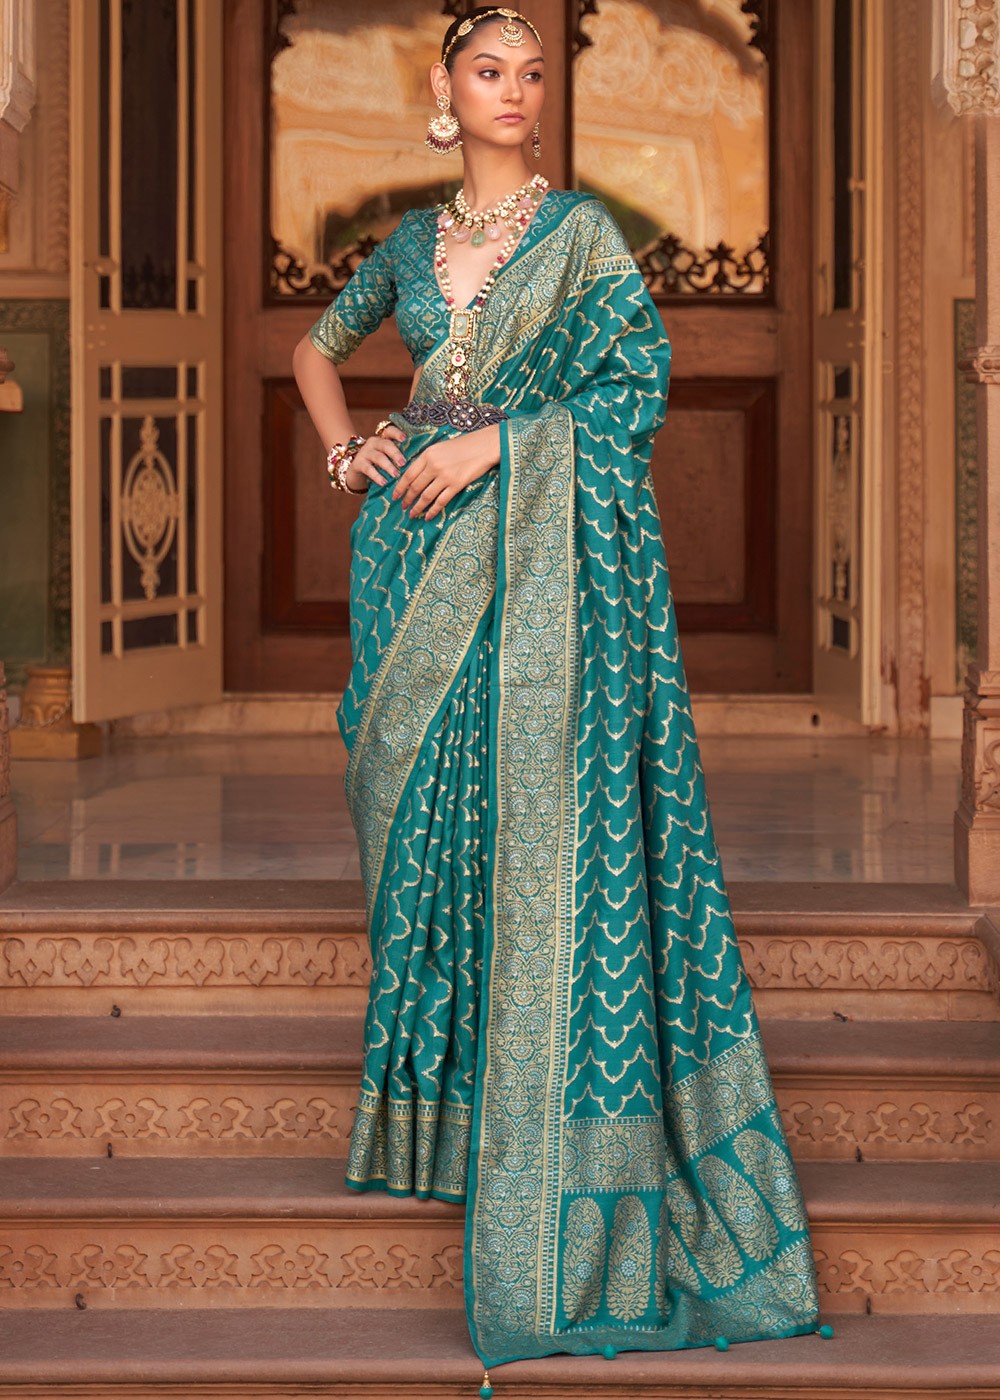 a woman in a green banarsi saree | Wedifys